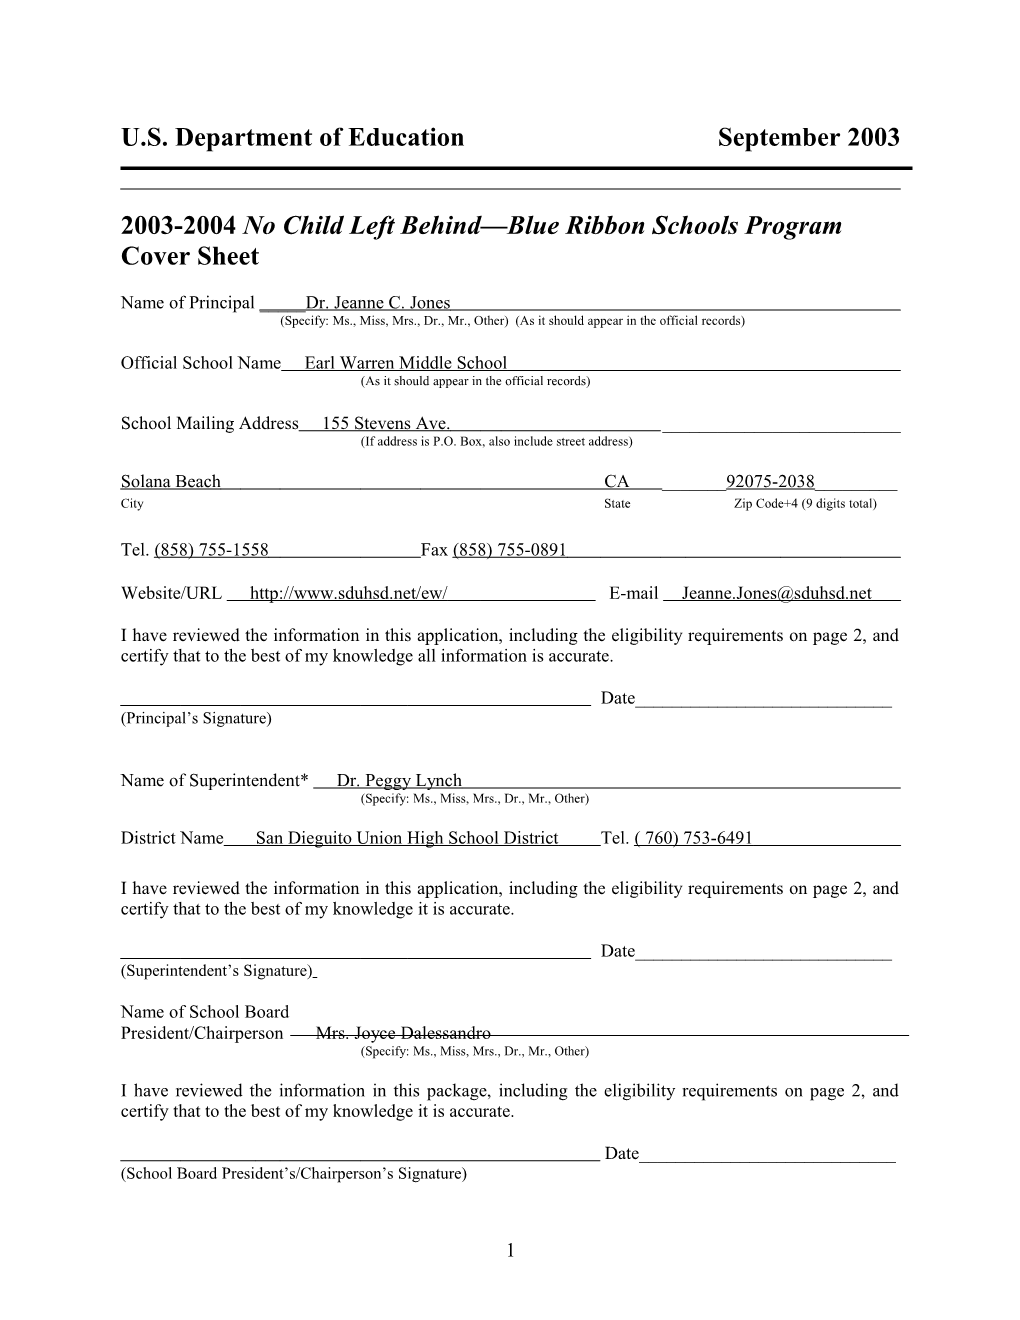 Earl Warren Middle School 2004 No Child Left Behind-Blue Ribbon School Application (Msword)